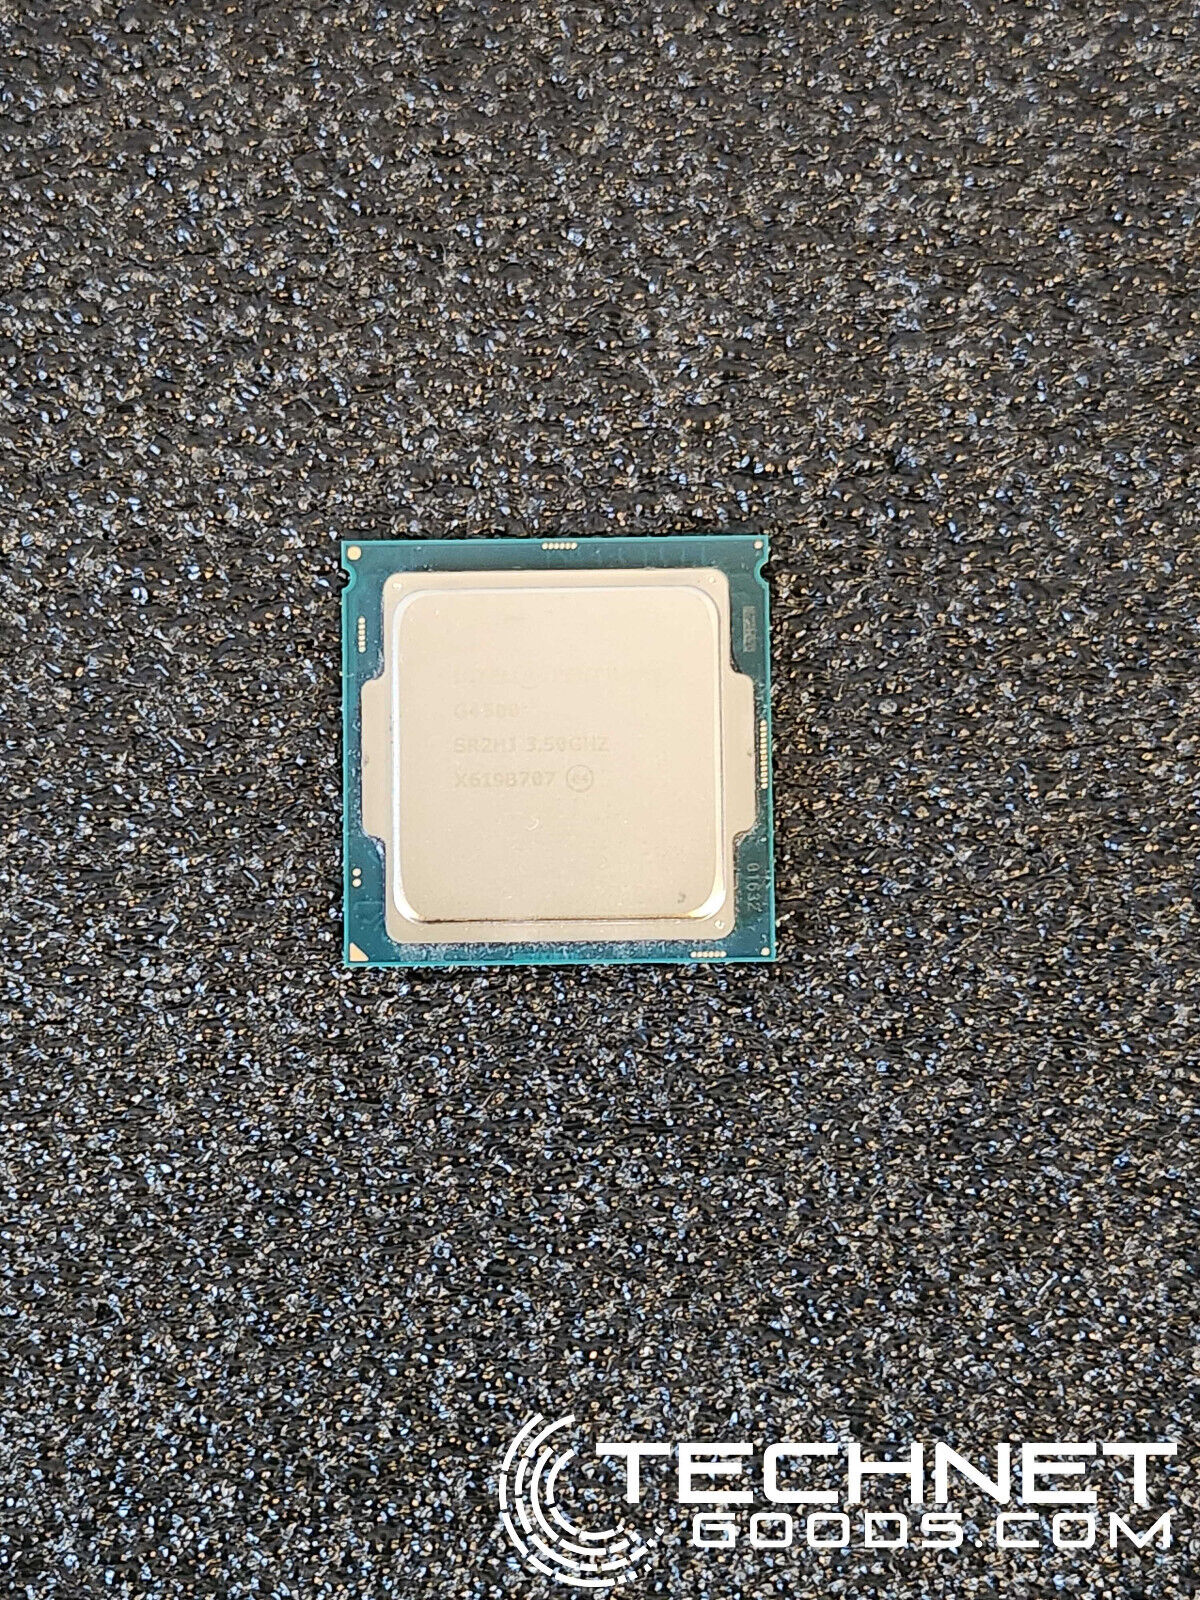 Intel Pentium G4500 (3.4Ghz) Processor - TESTED